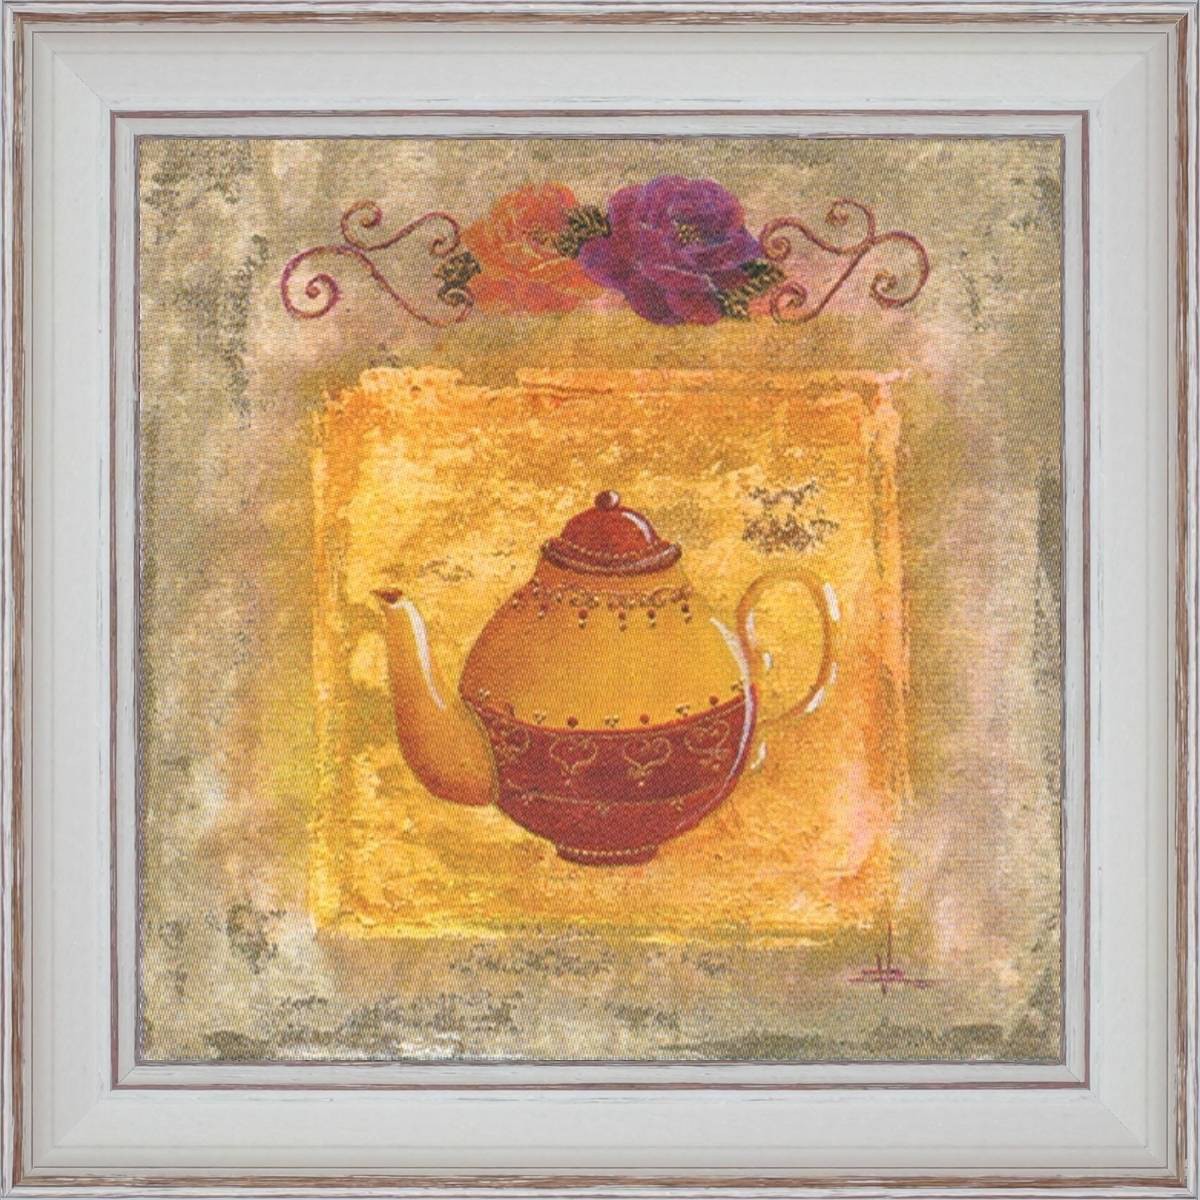 The teapot - painting detail 40 x 40 cm